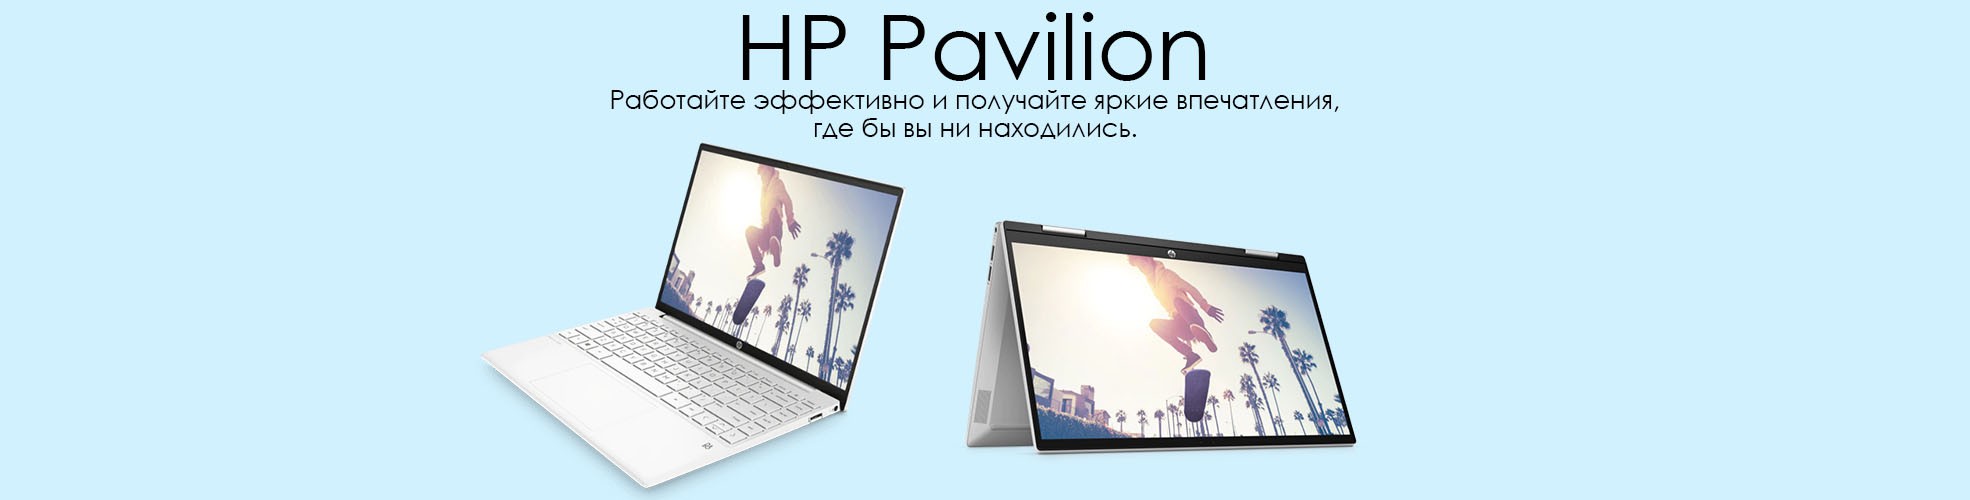 HP Pavilion в Ташкенте Купить в Узбекистане по Лучшим ценам